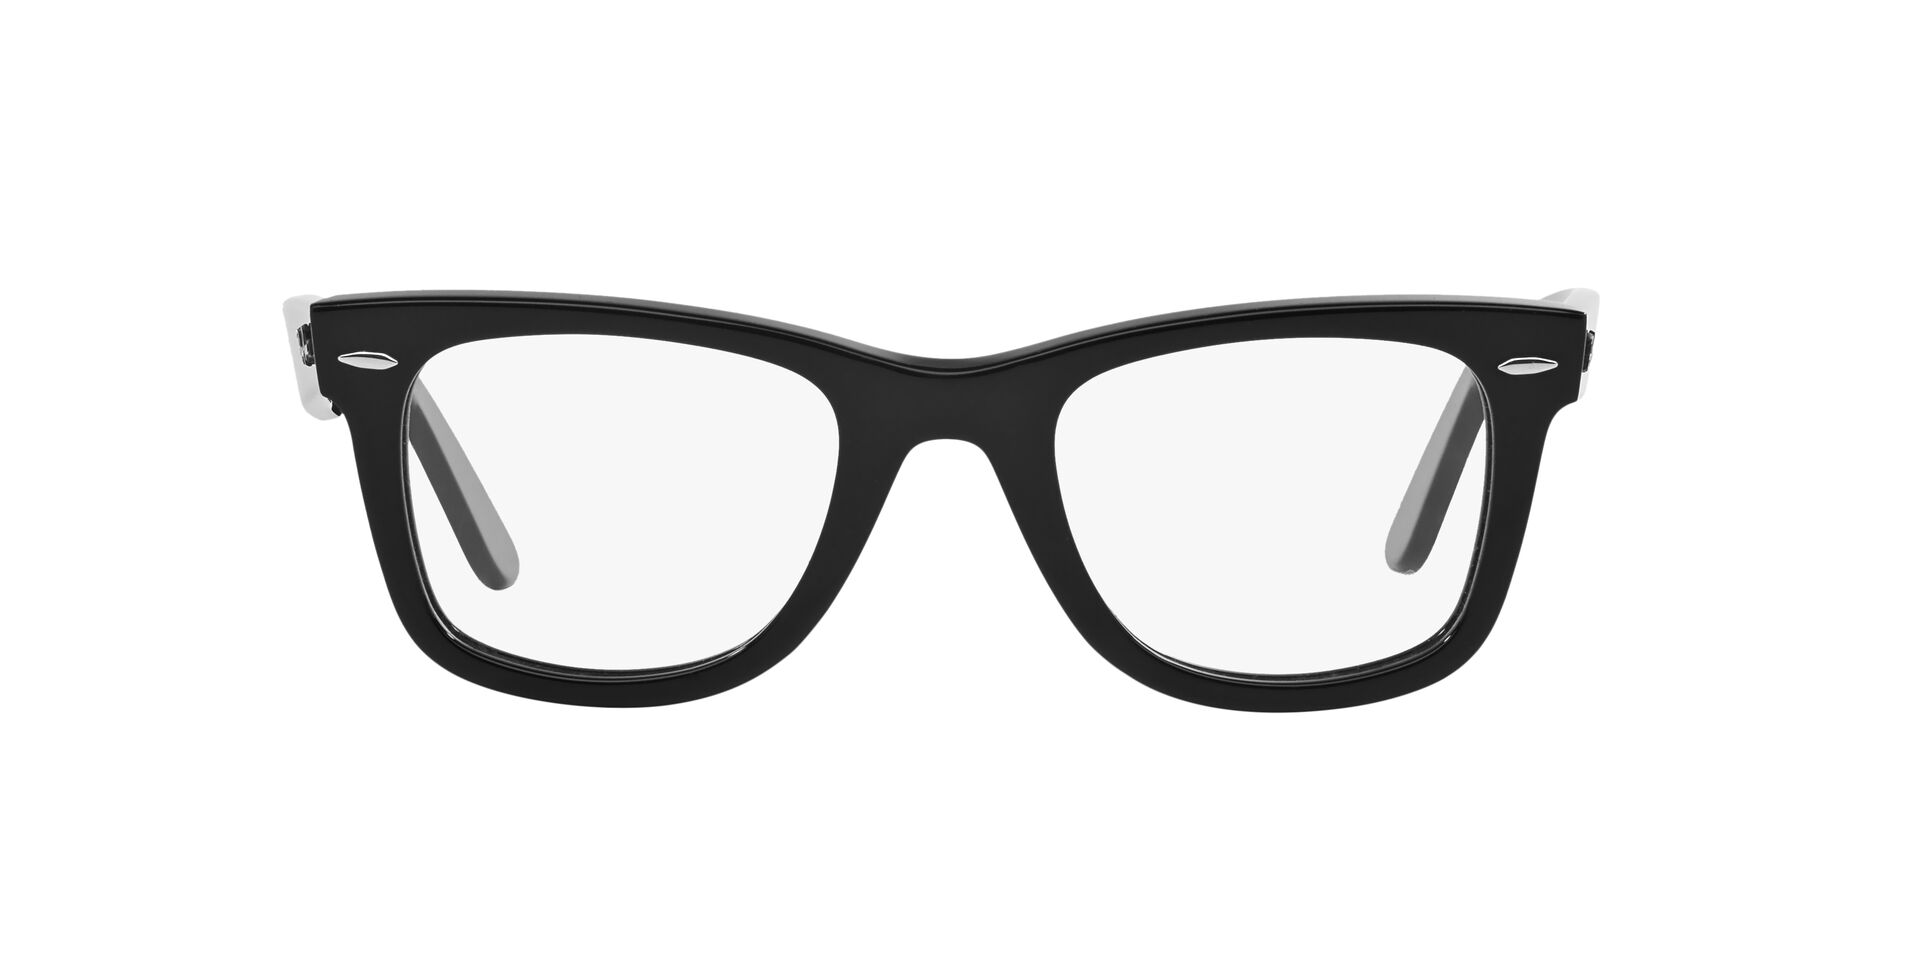 Buy Ray-Ban Original Wayfarer Optics Eyeglasses Online.